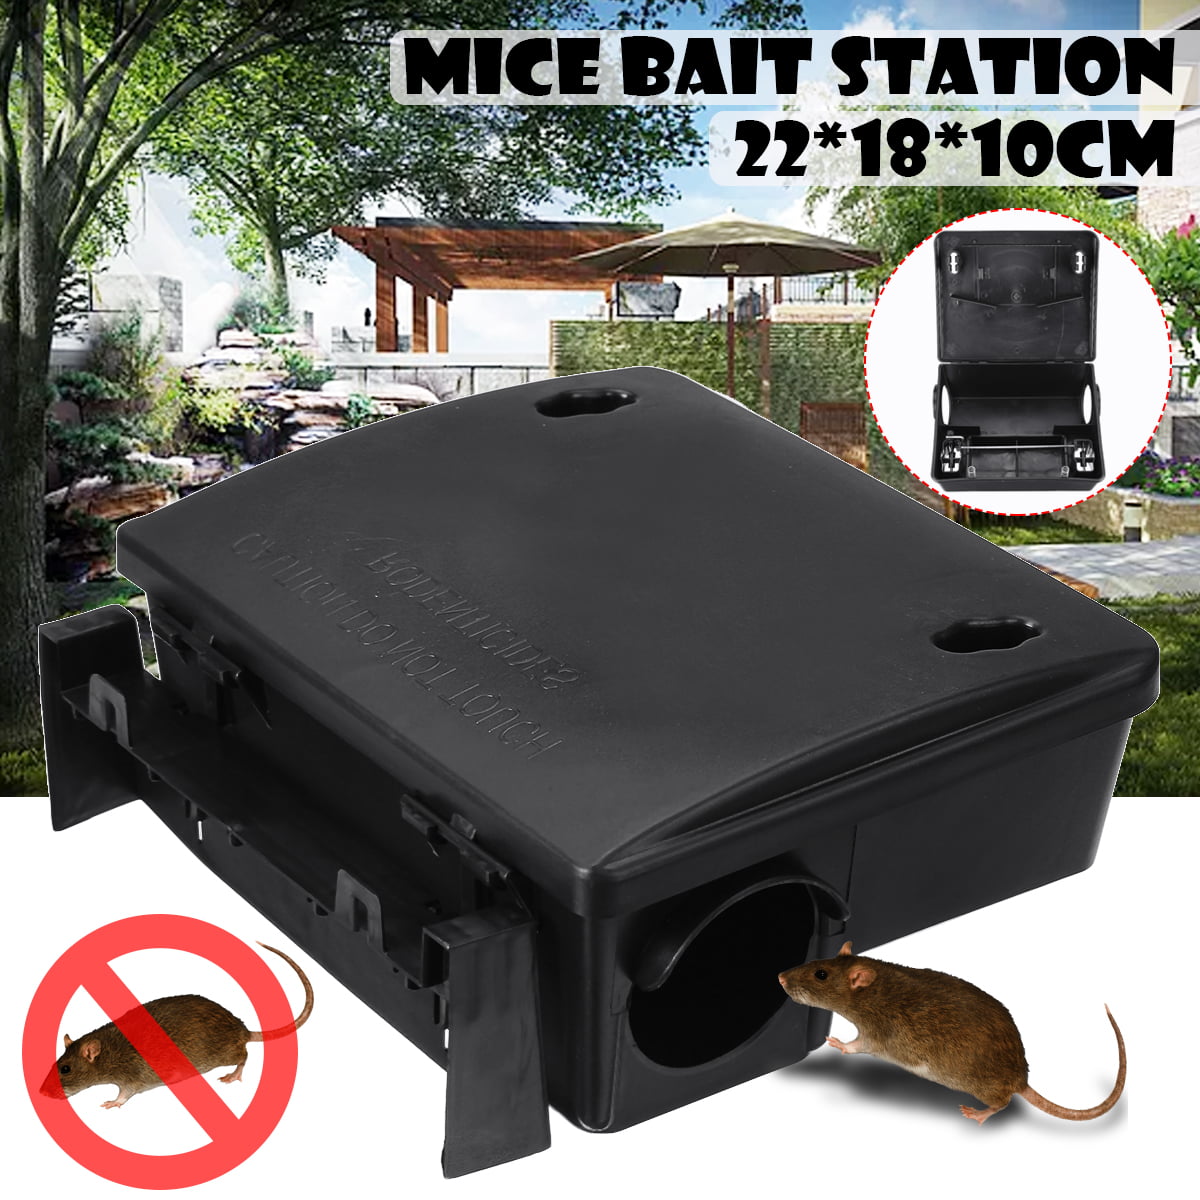 Details about   Control Trap Rat Killer Pest Mouse Rodent Mice Stock Bait 100g 